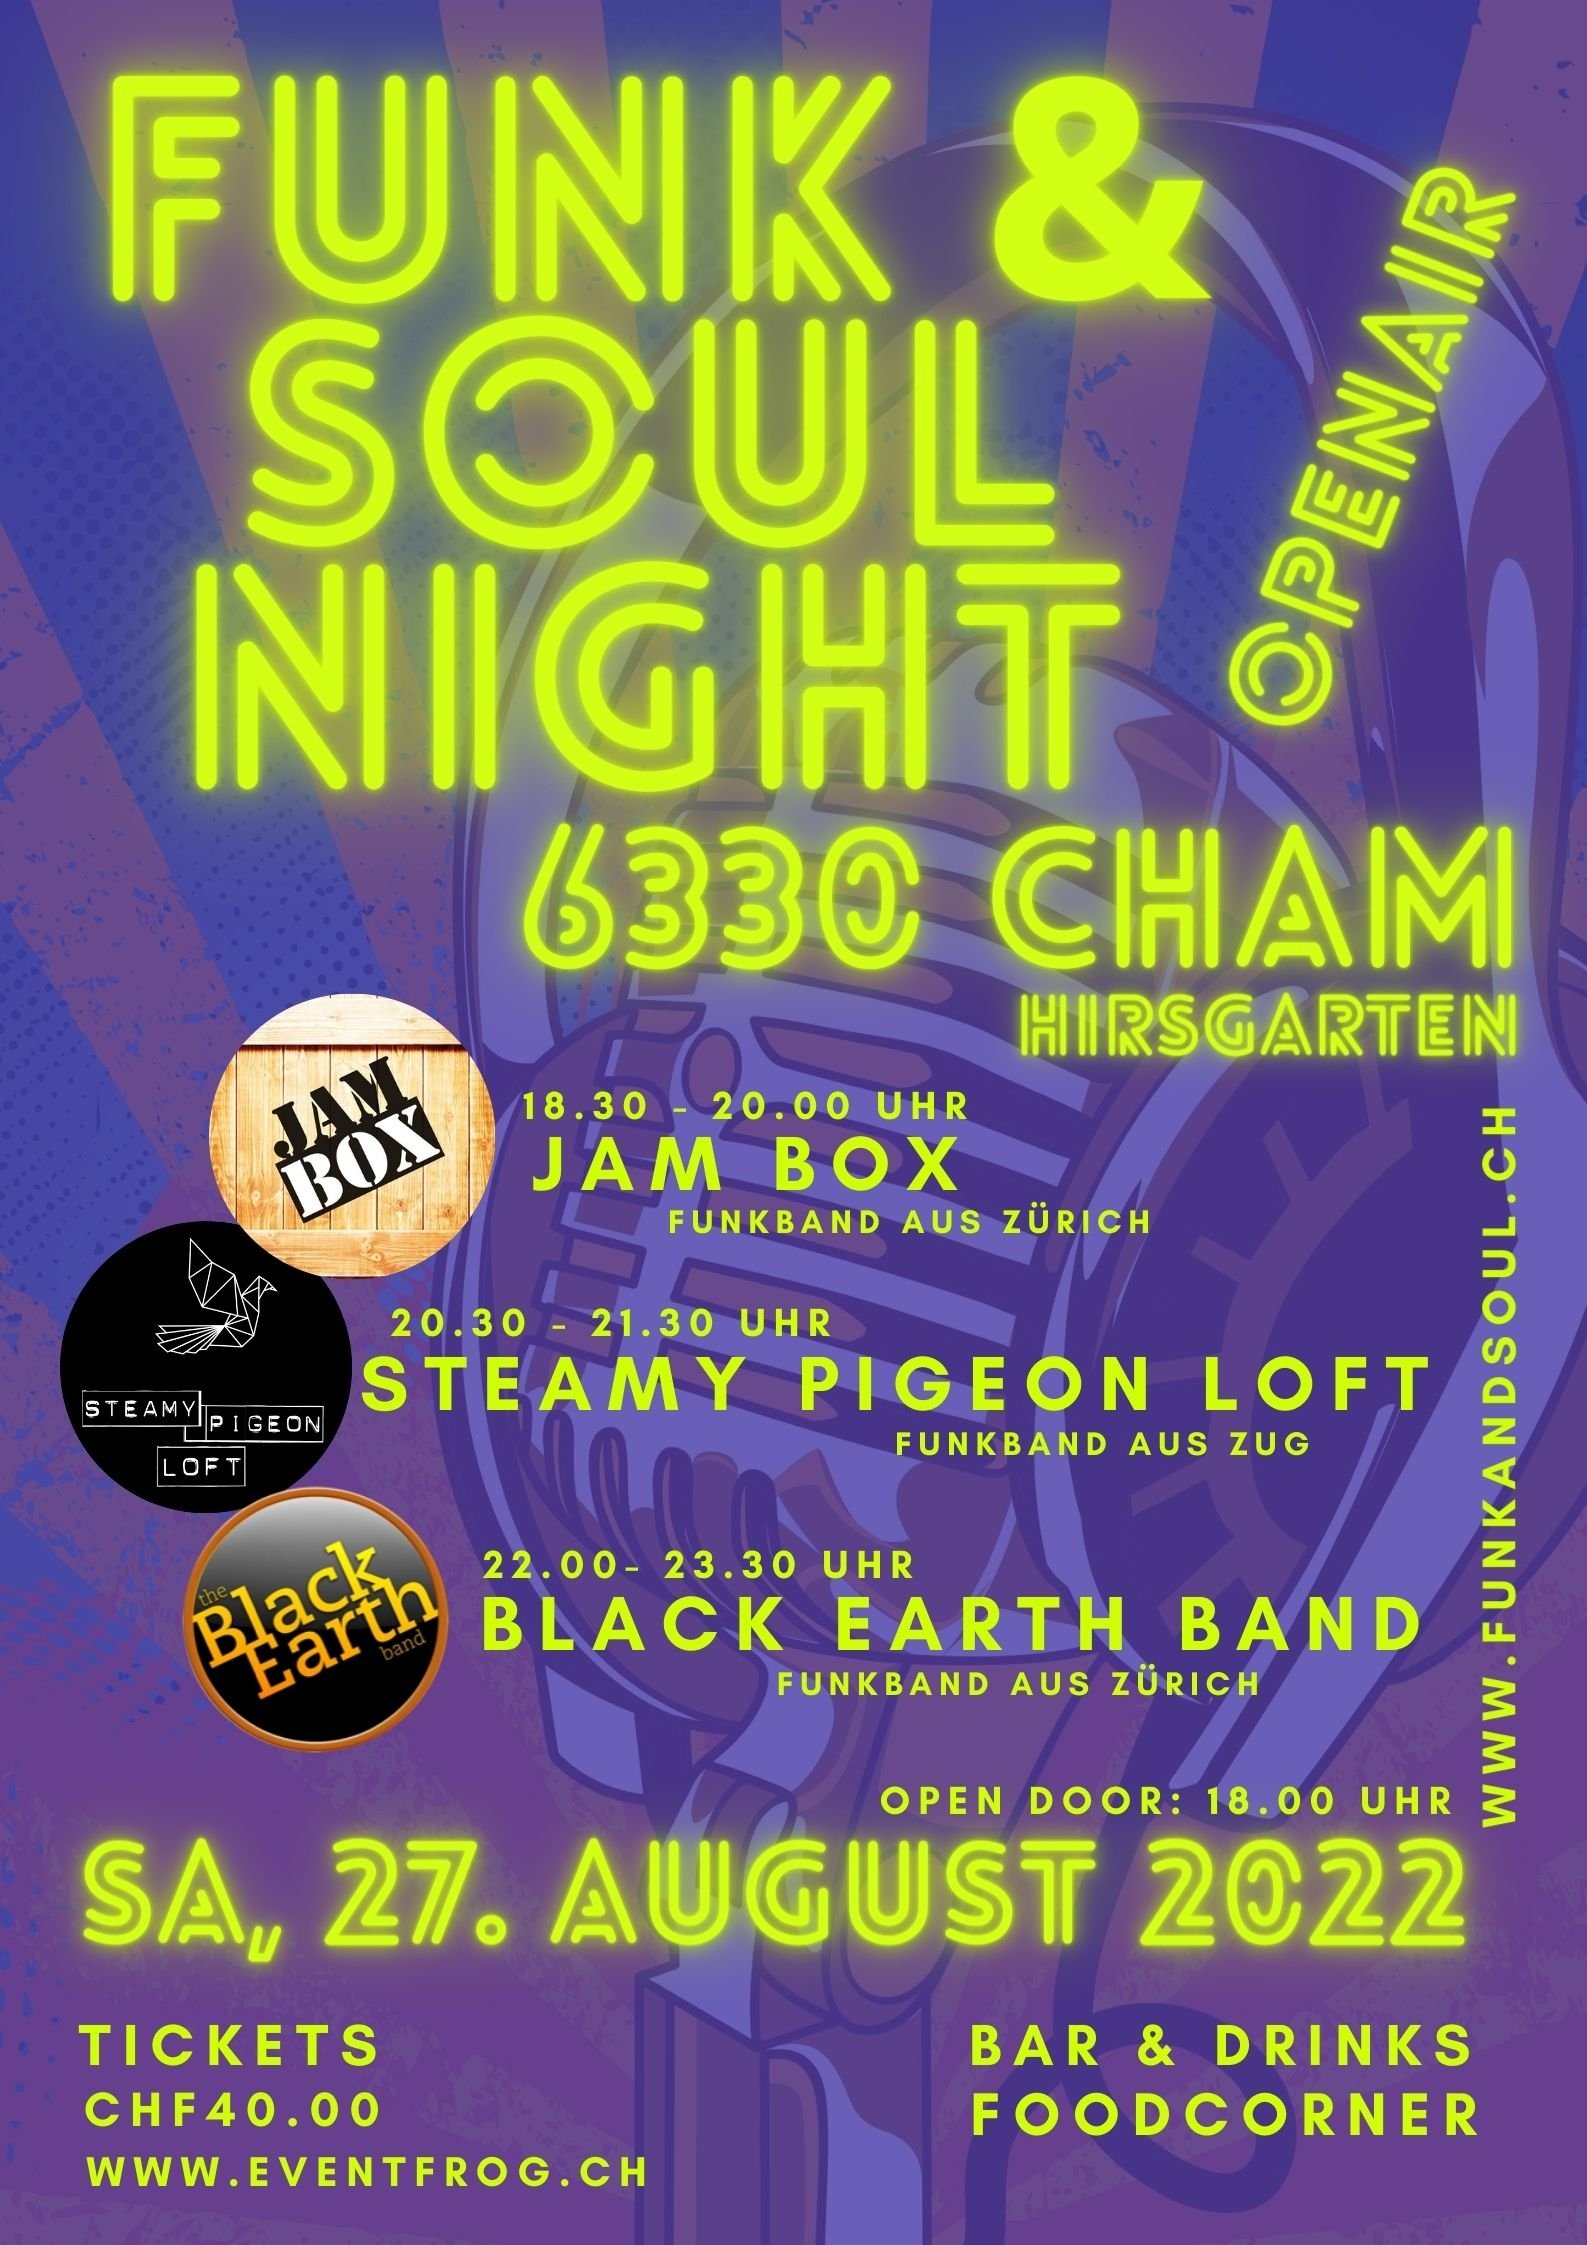 Funk &amp; Soul Night - Cham Hirsgarten OPENAIR